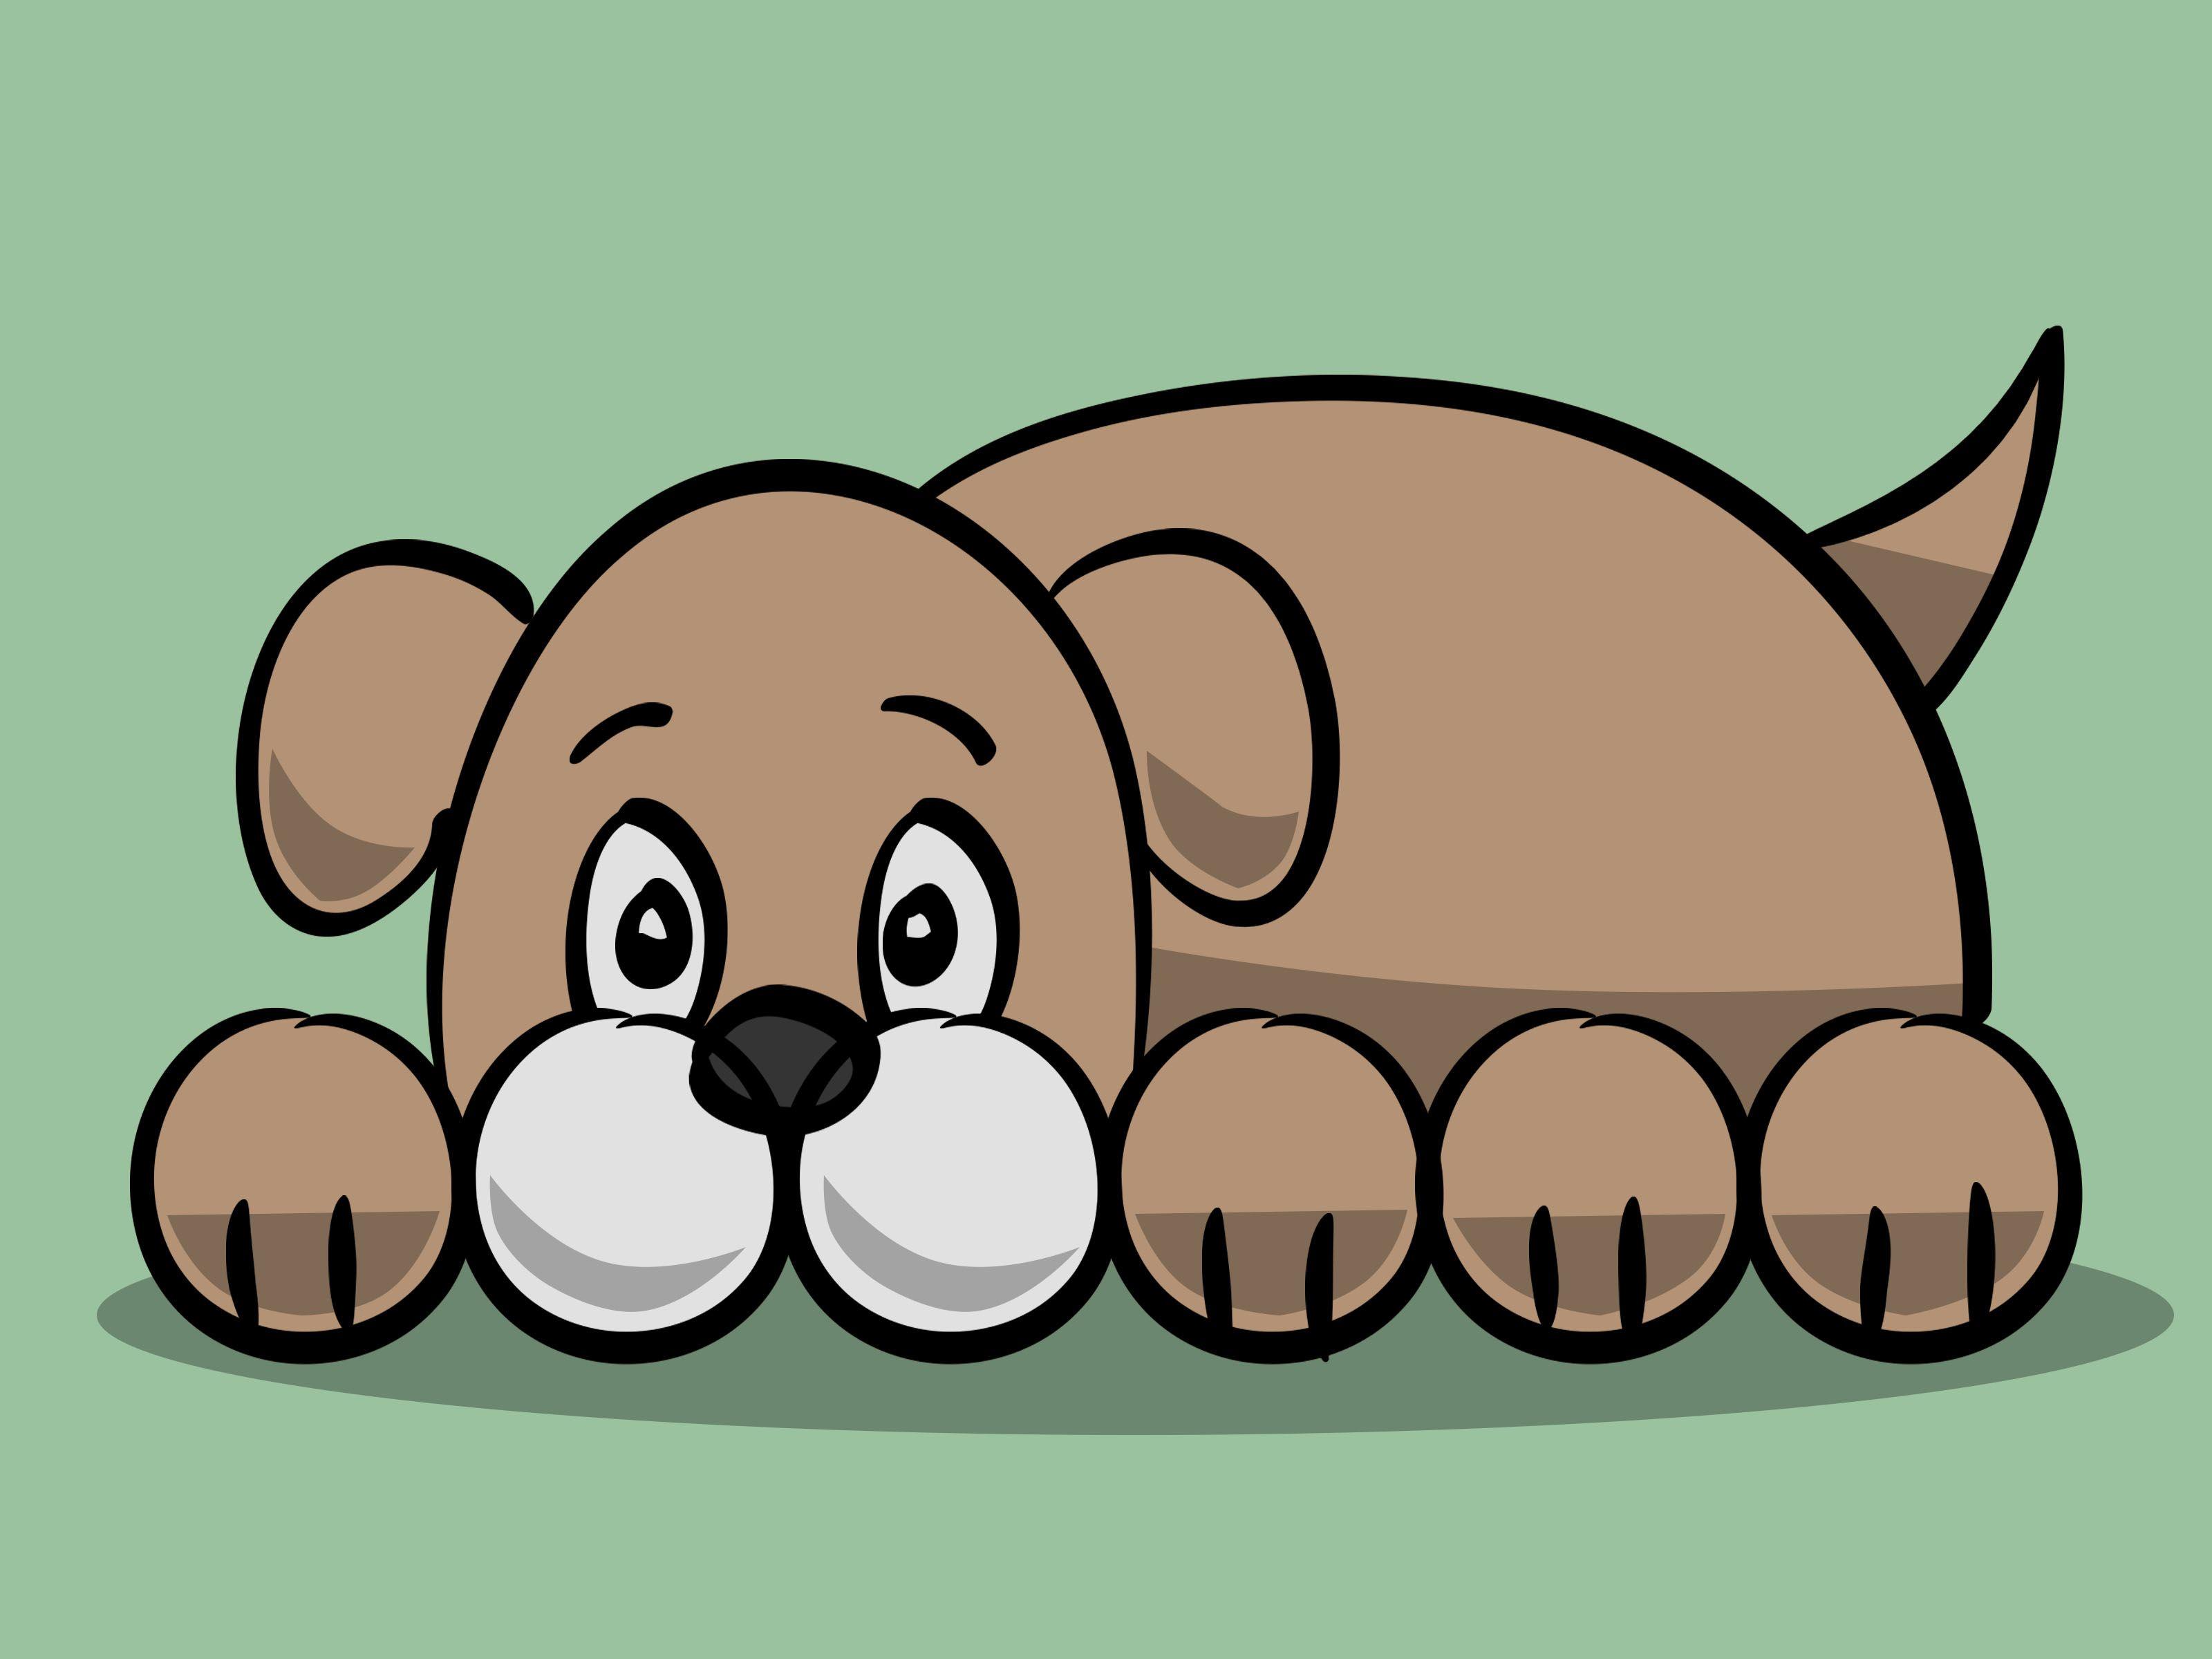 Download Cute Cartoon Dog Wallpapers - Top Free Cute Cartoon Dog ...